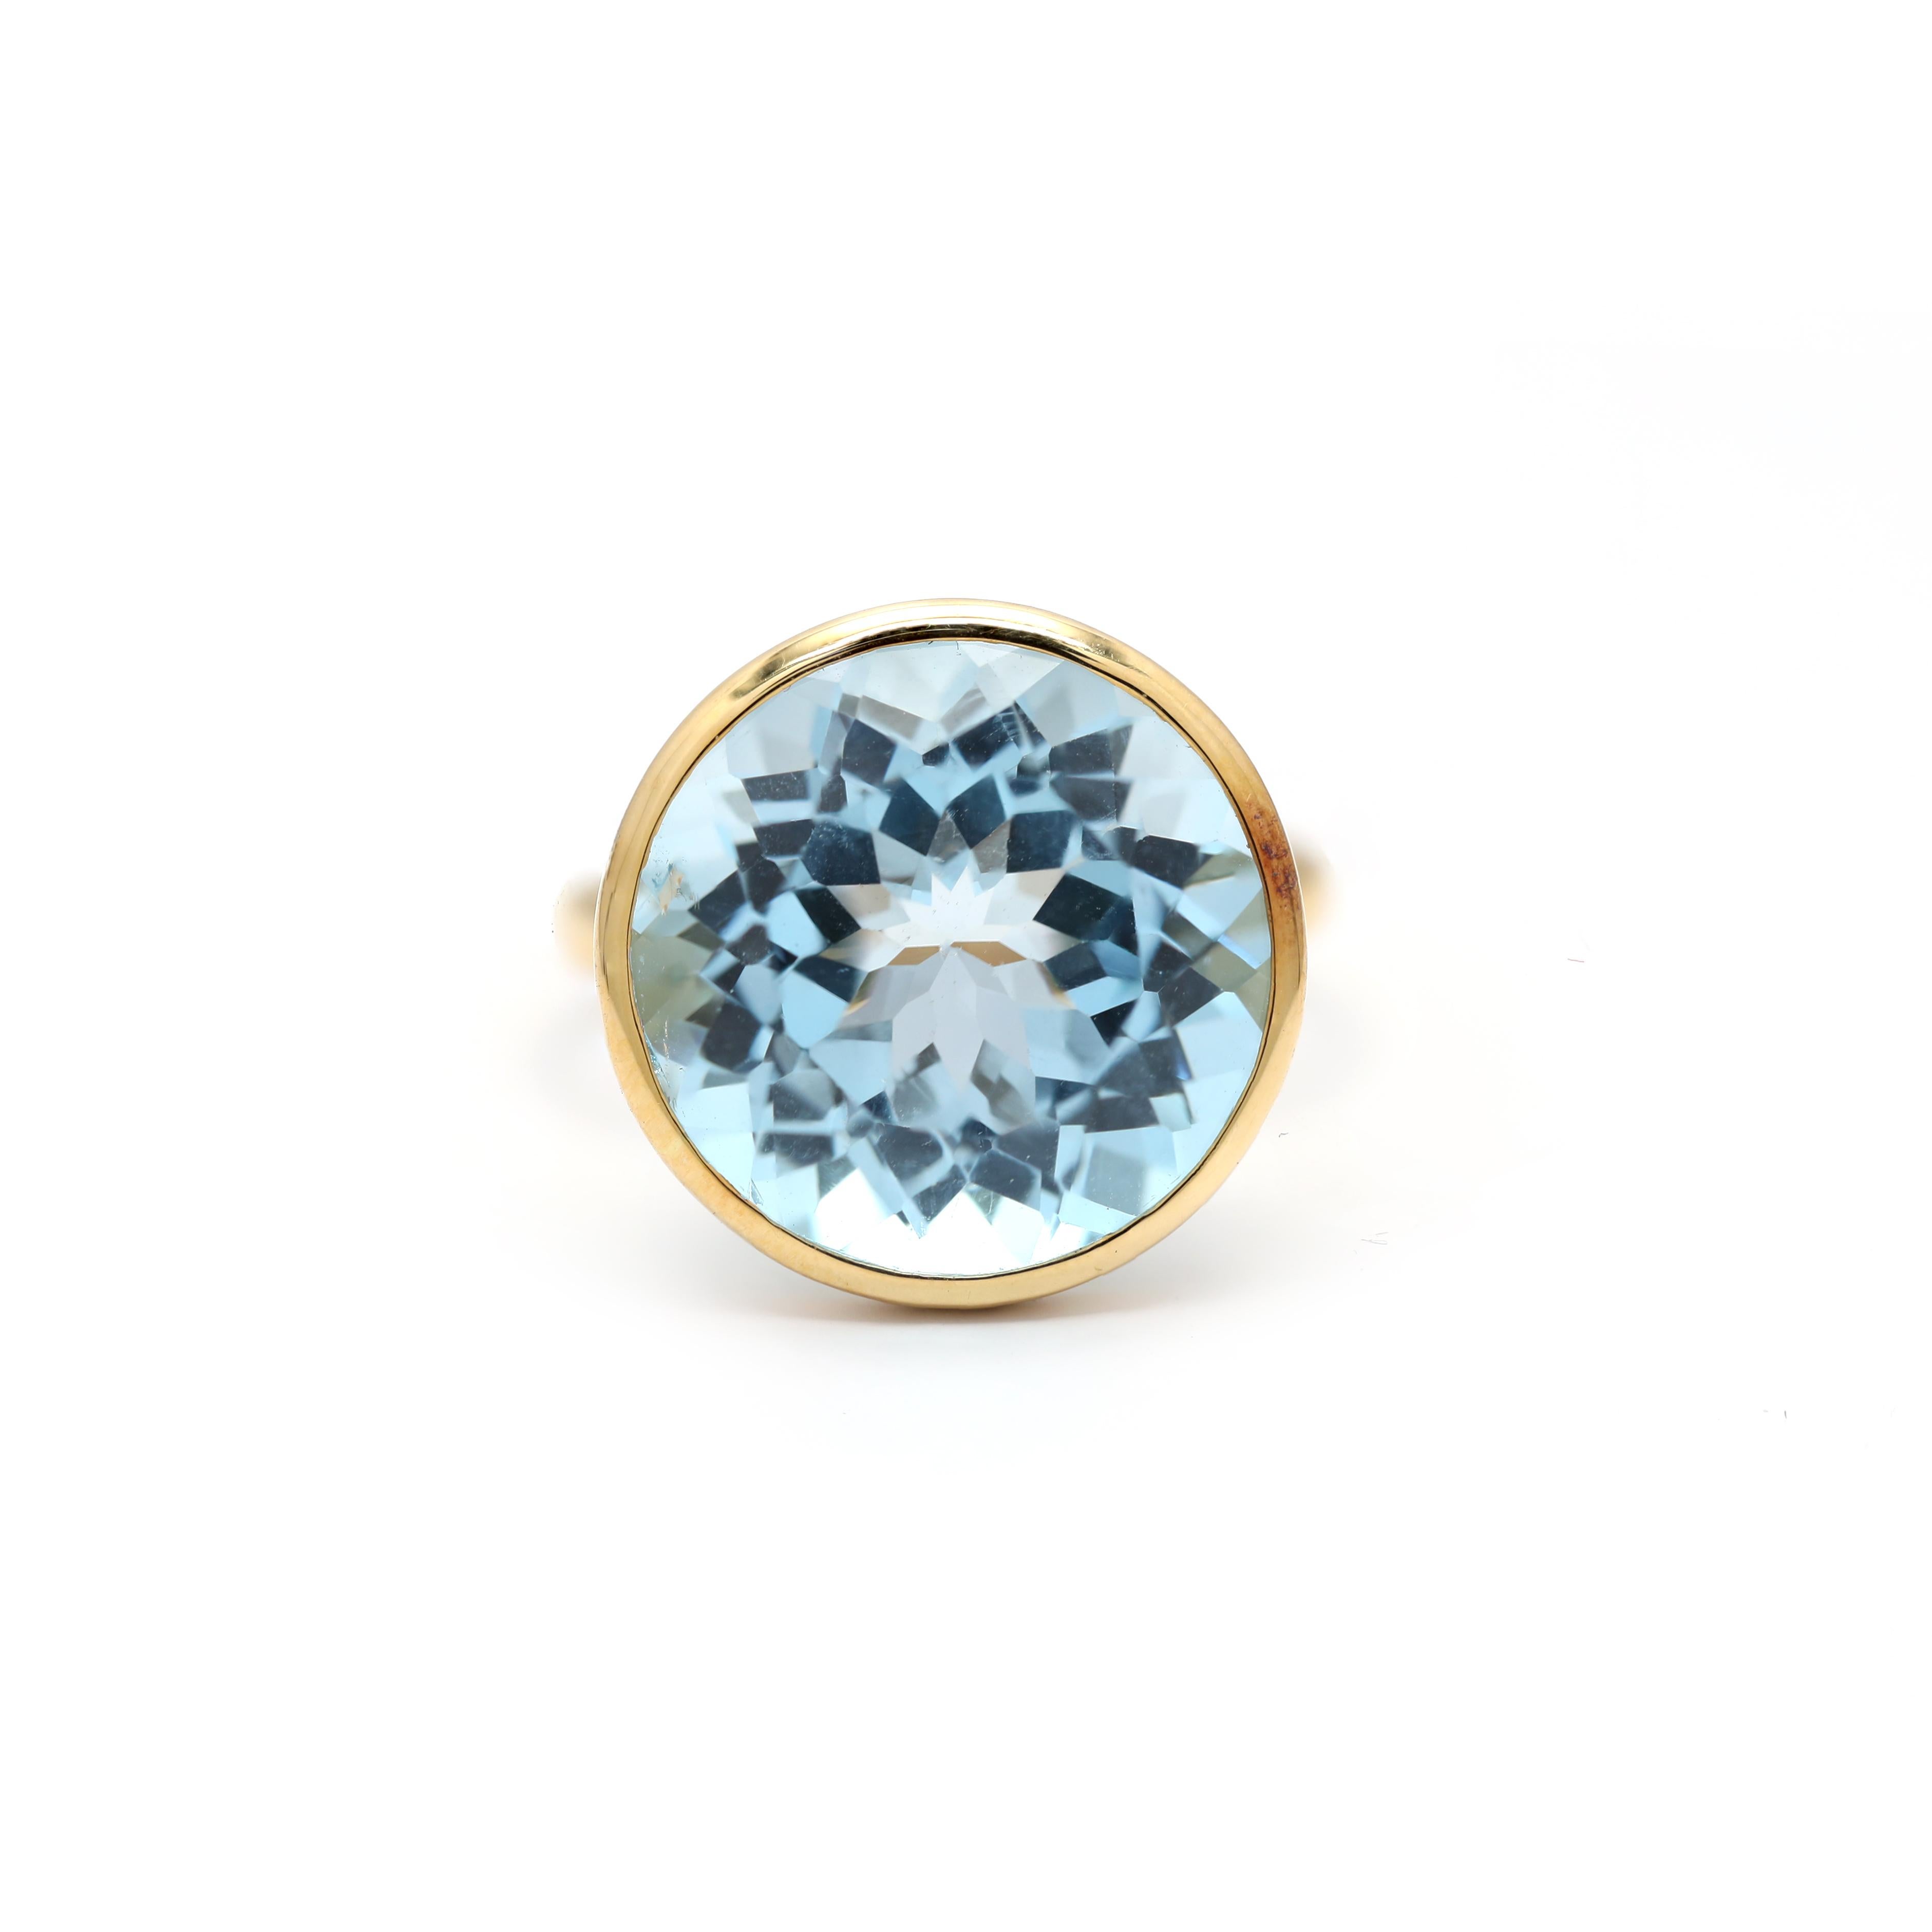 For Sale:  4 Carat Bezel Set Aquamarine Gemstone Ring in 18K Solid Yellow Gold 2